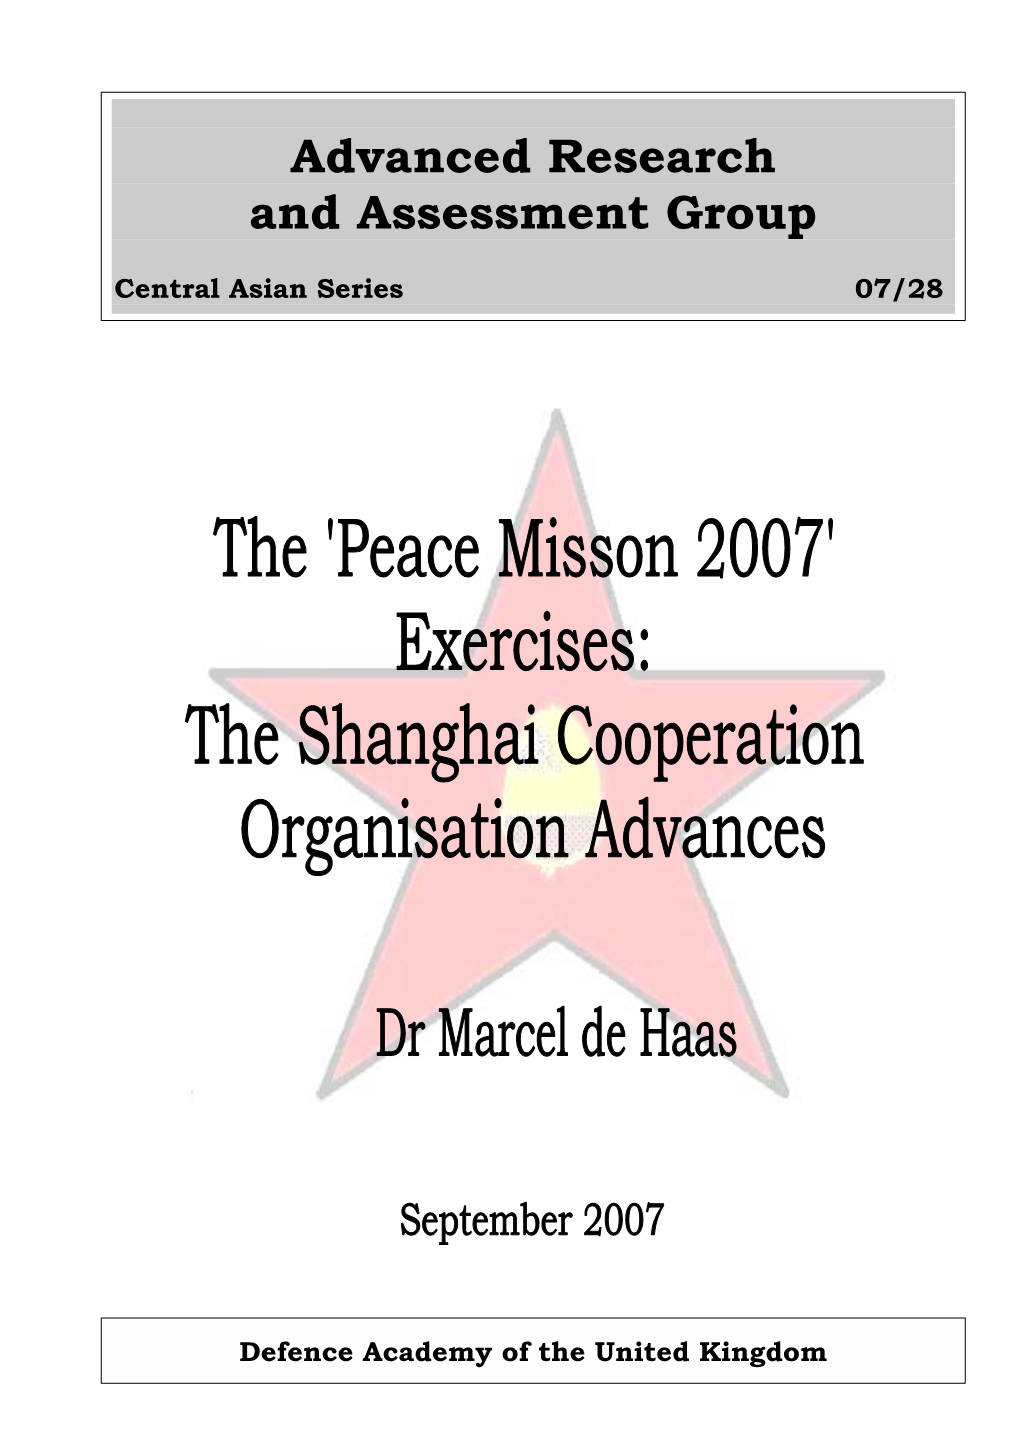 Exercises: the Shanghai Cooperation Organisation Advances